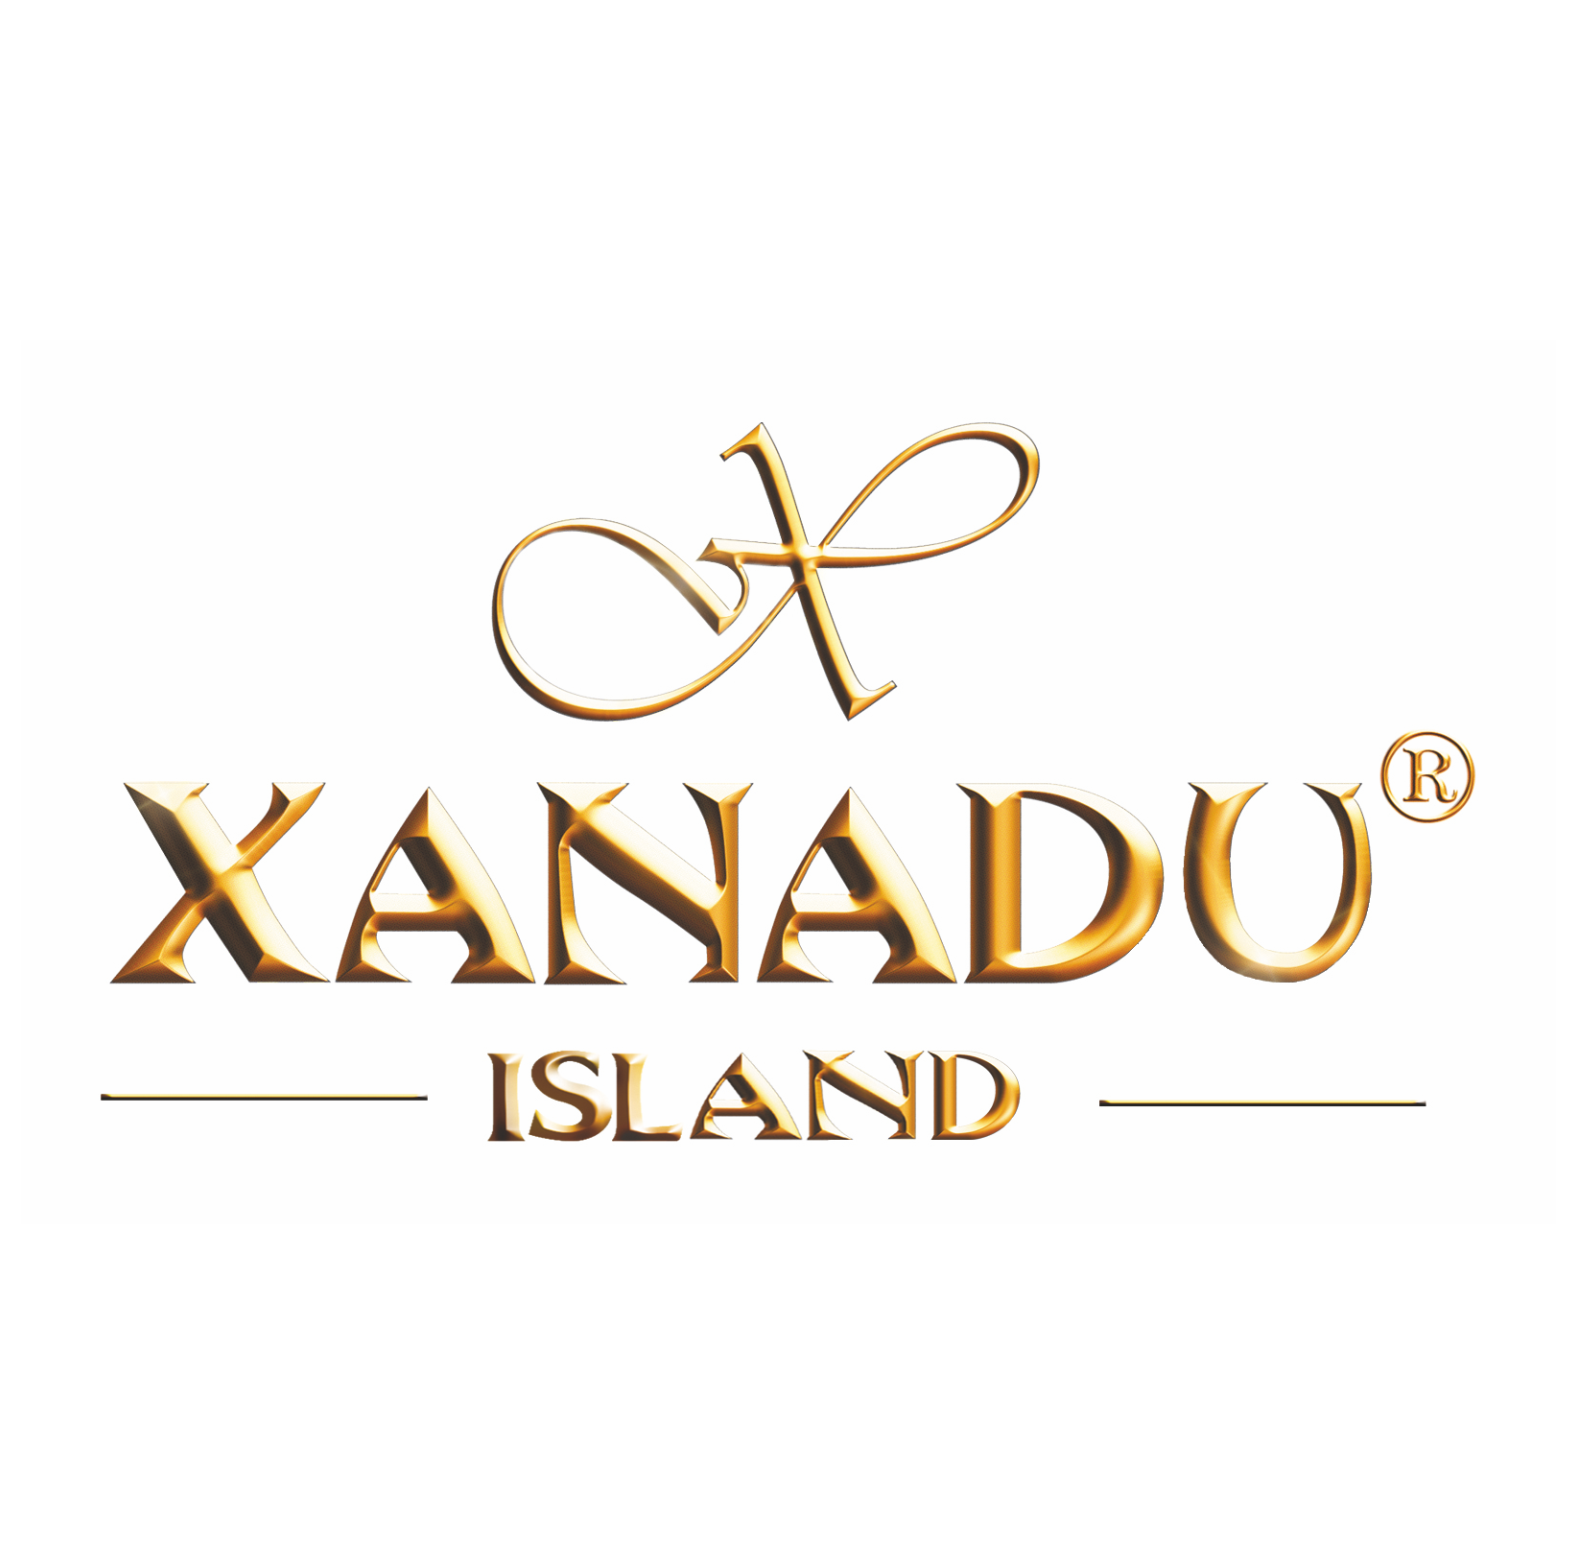 XANADU ISLAND HOTEL